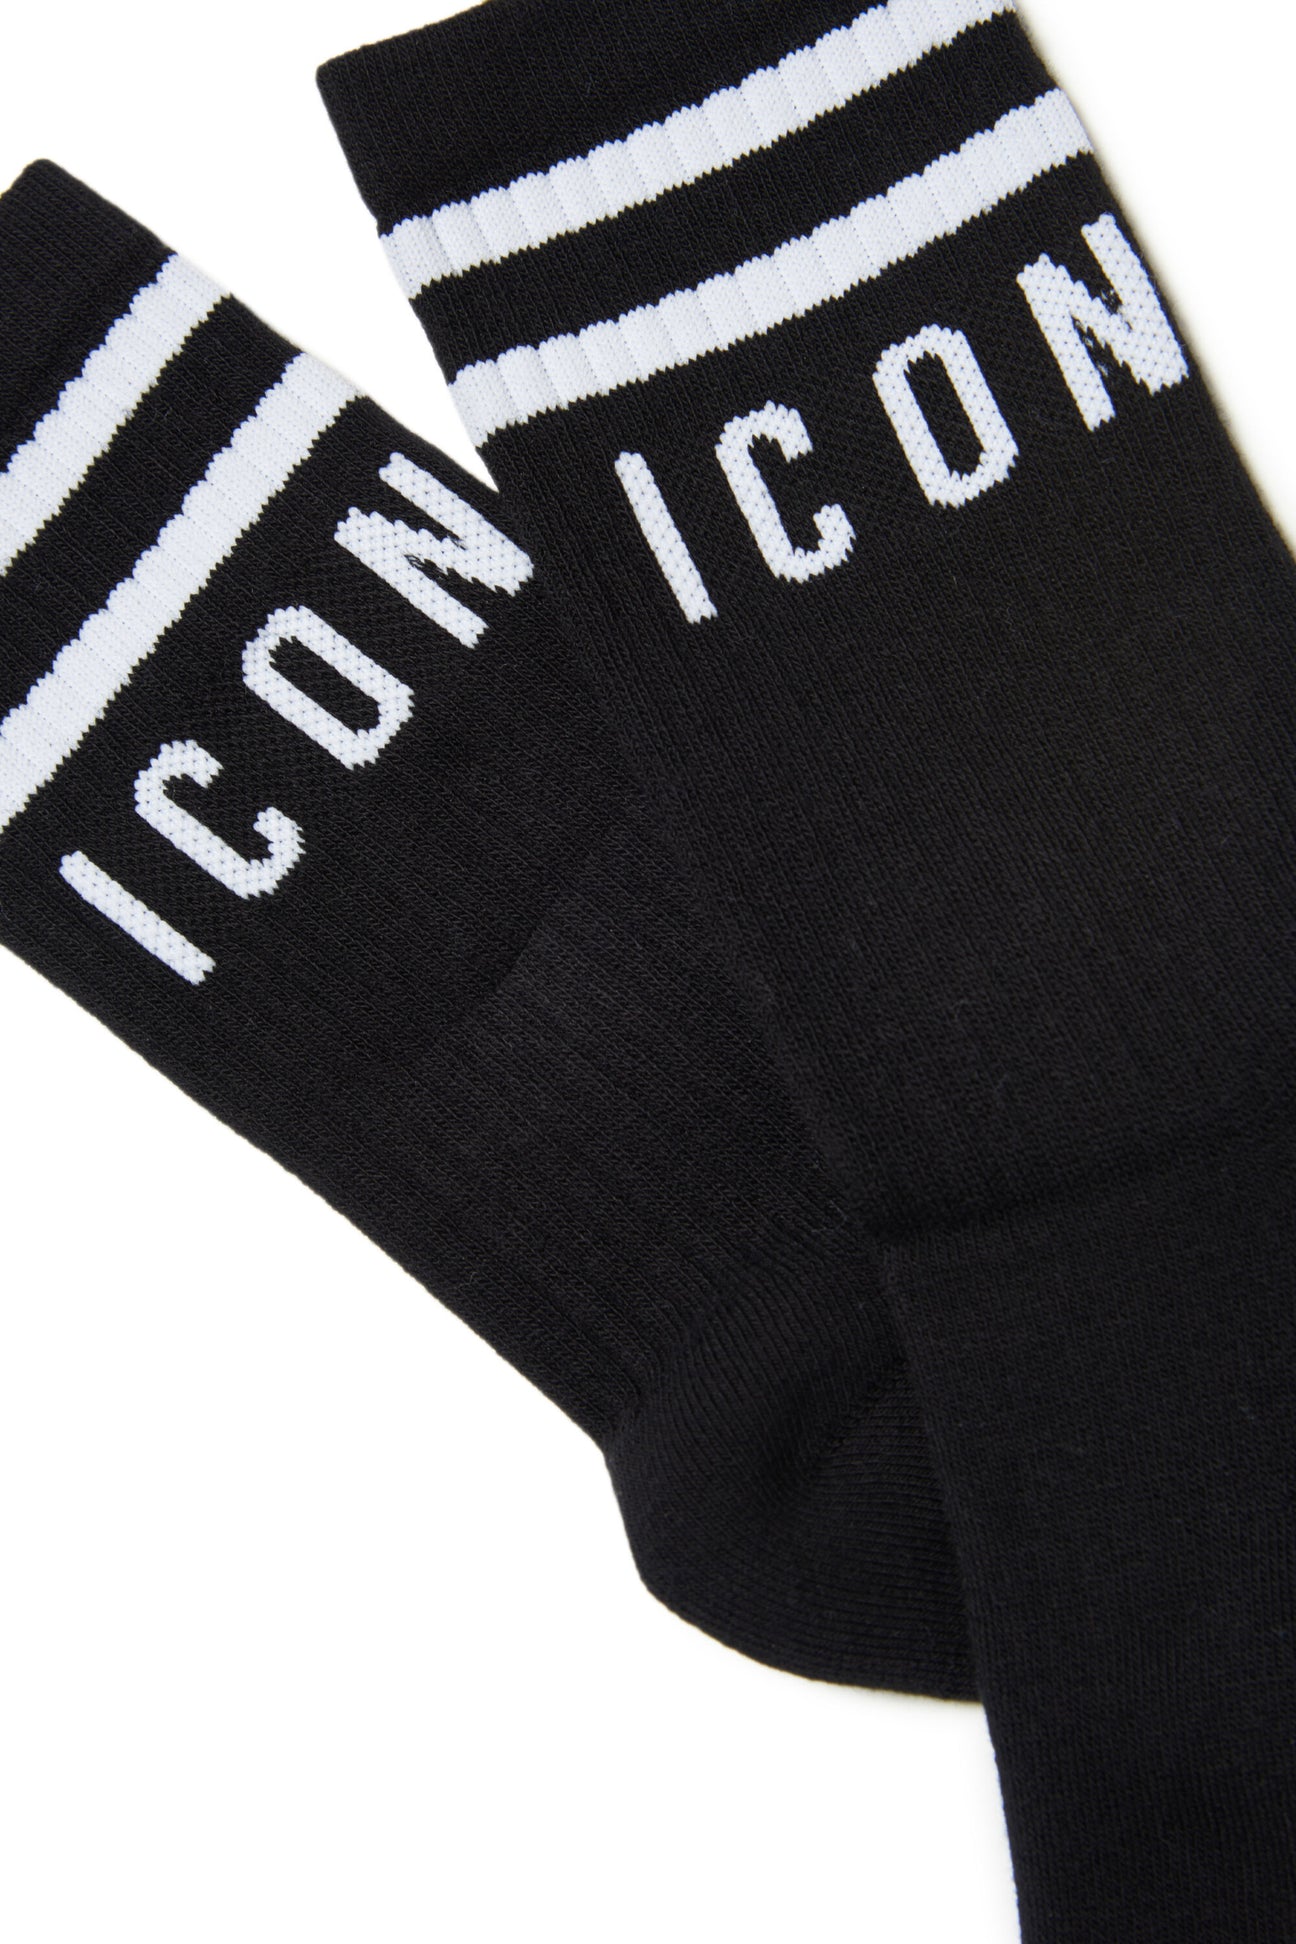 Black socks with Icon logo Black socks with Icon logo